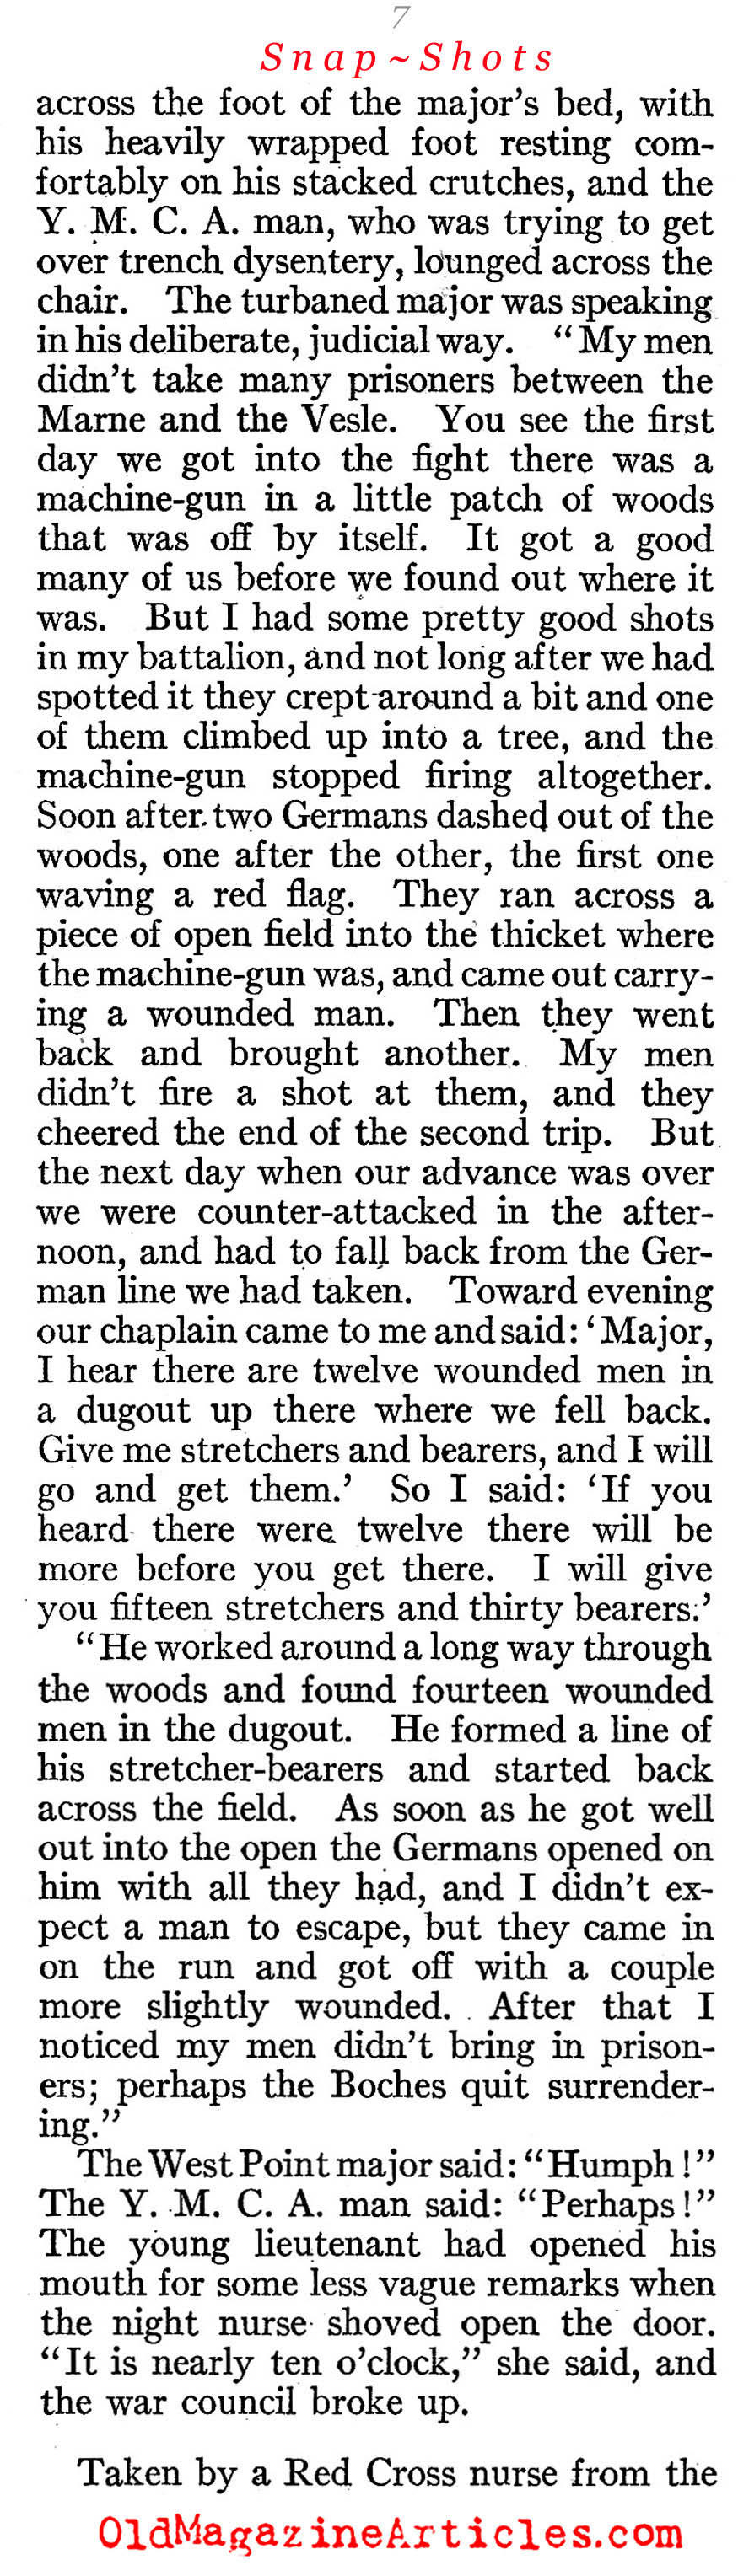 Scenes From The War (Scribner's Magazine, 1919)